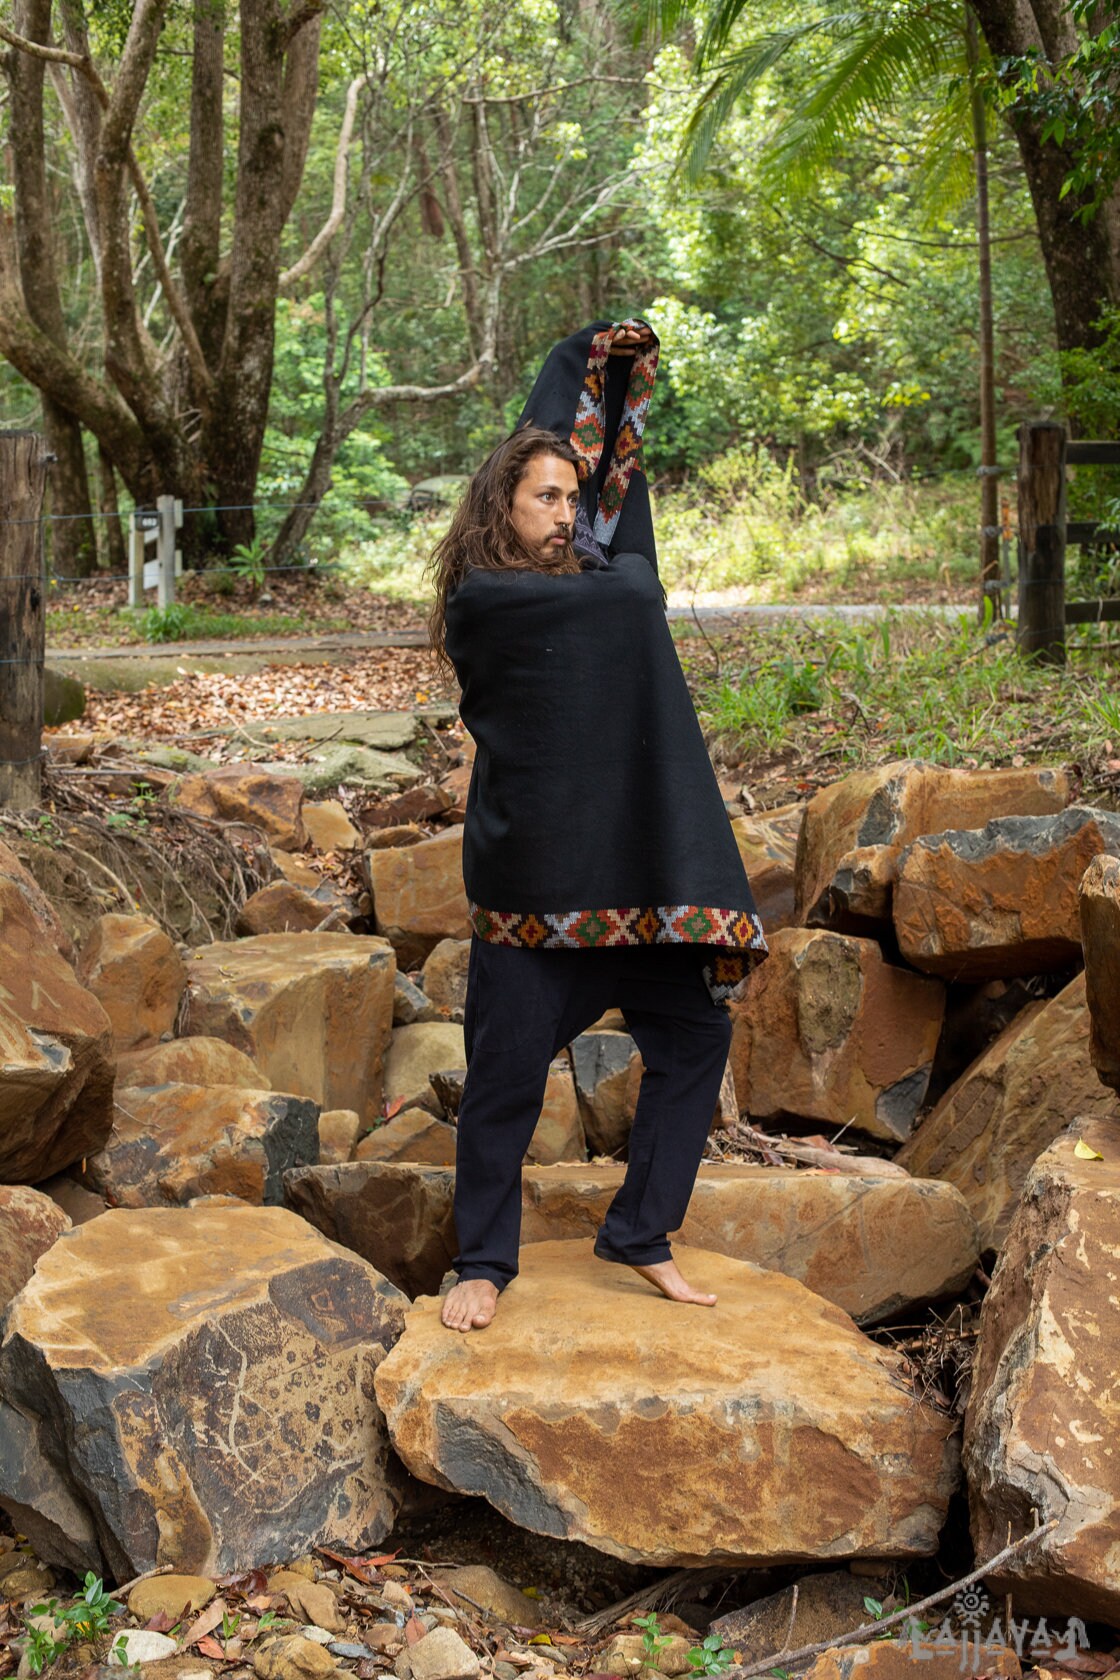 SADHU Shawl Black Handwoven Wool Meditation Prayer Scarf Blanket Premium Pure Cashmere Winter Tribal Zen Embroidery Boho Wrap AJJAYA